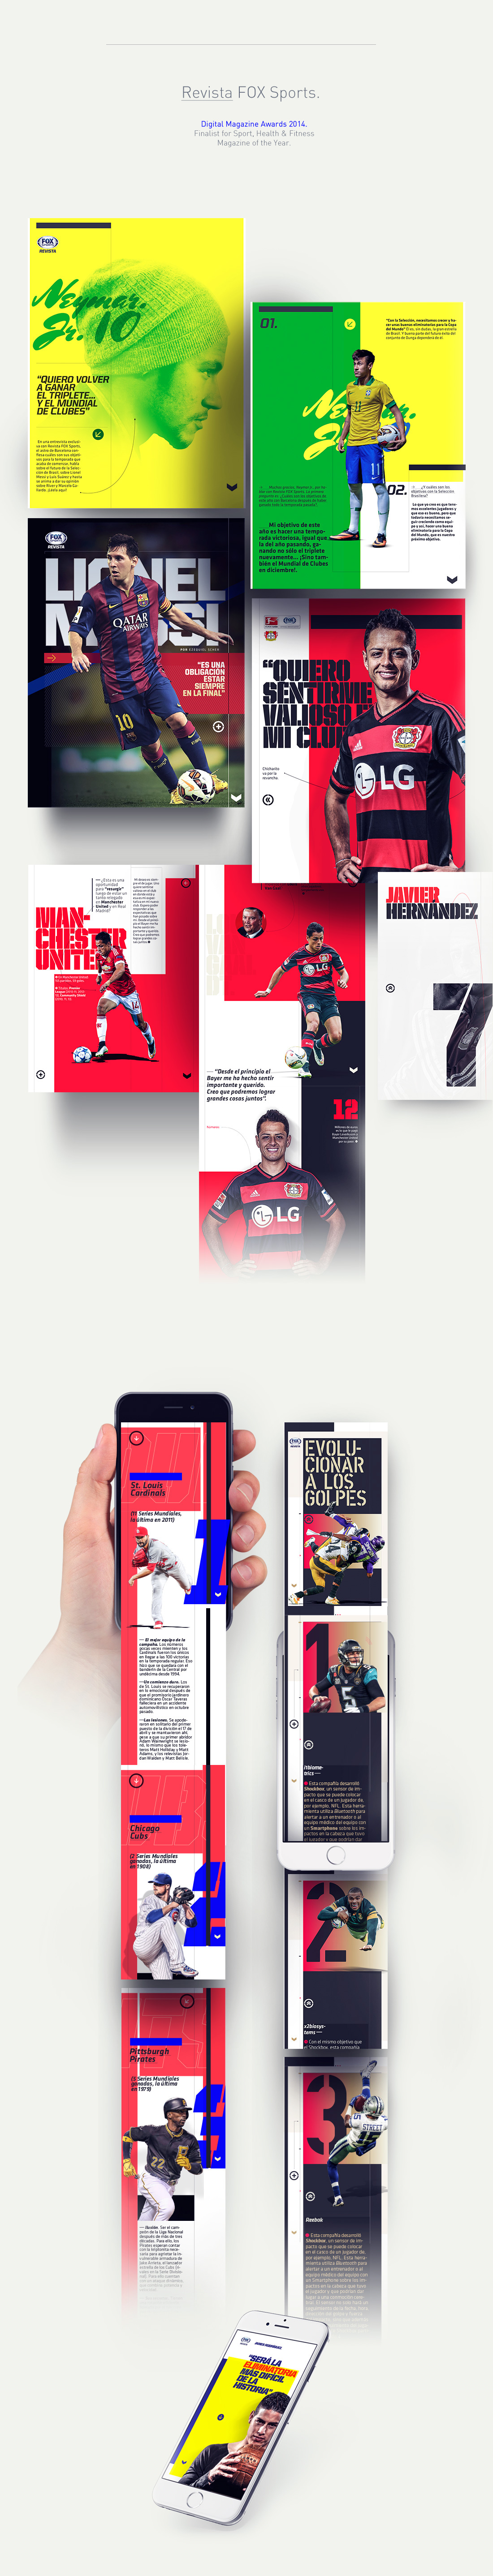 Adobe DPS Digital Magazine iPad Fox Sports apps applications editorial Brand Content messi soccer Futbol creative touch video sound